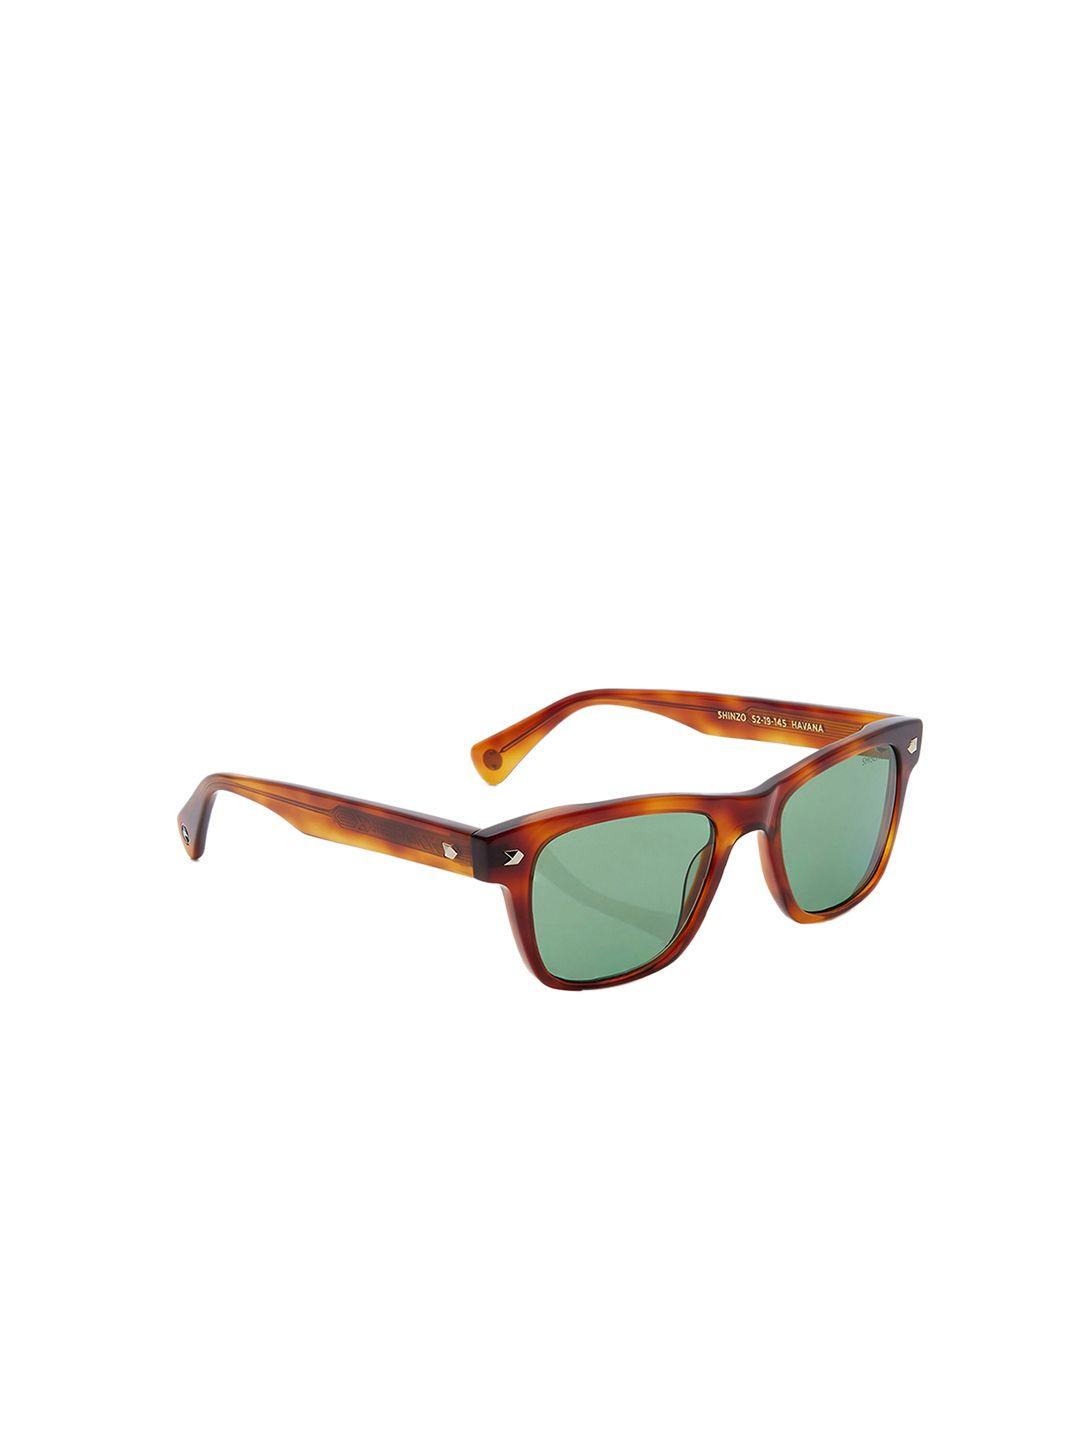 shisen fox unisex square sunglasses with uv protected lens